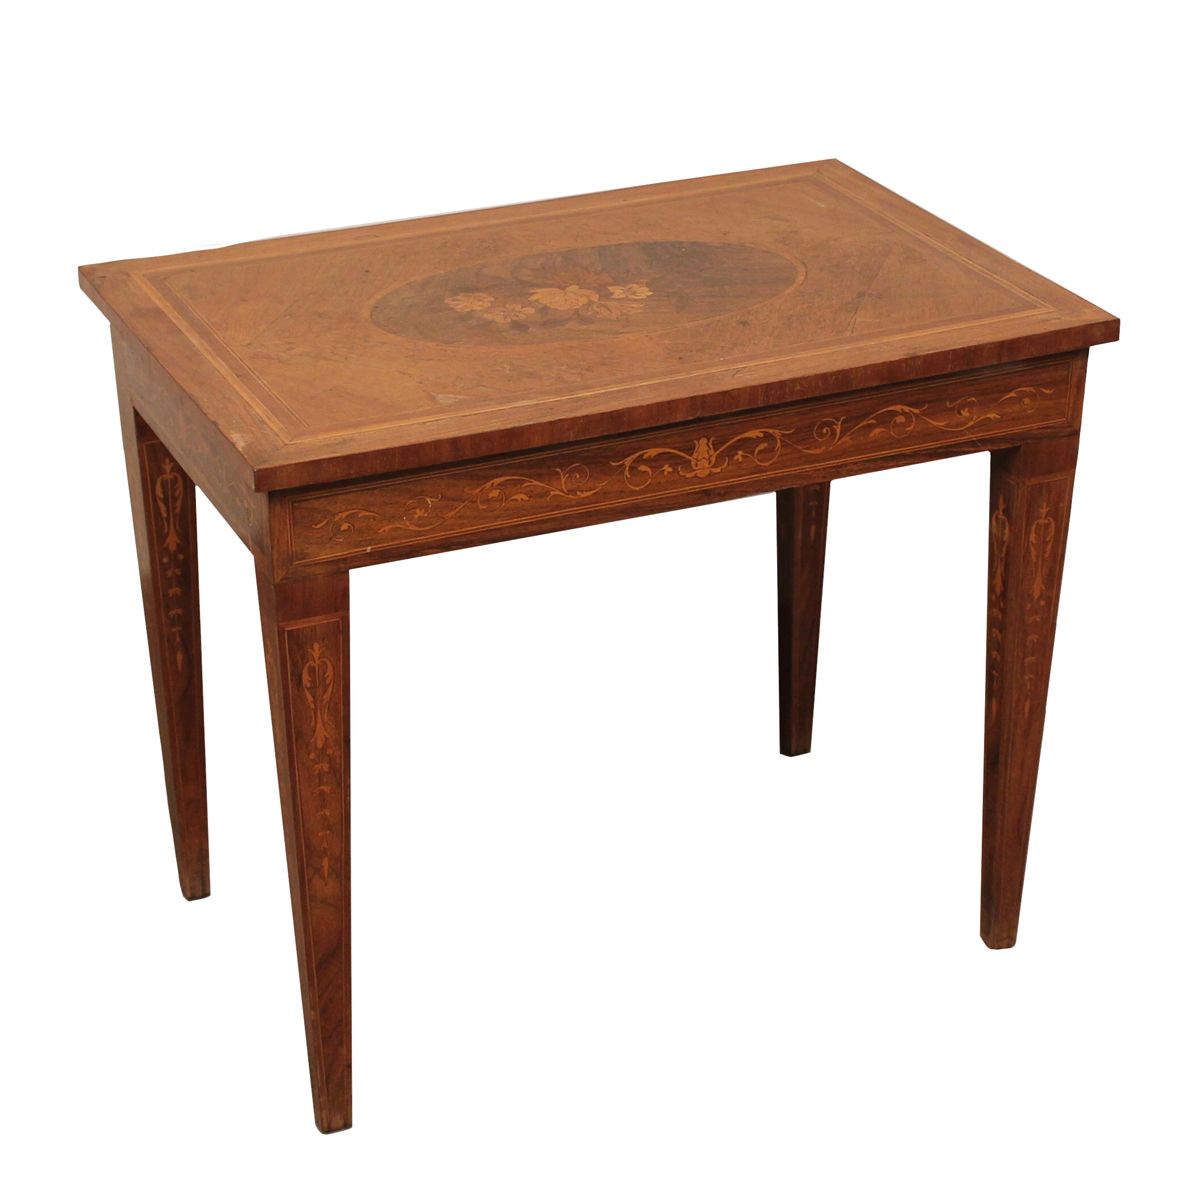 TAVOLINO BASSO - LOW TABLE 木头上镶嵌着装饰性的图案。20世纪。Cm 40x60 H 50
镶嵌有装饰图案的木材。20世纪。Cm 40&hellip;